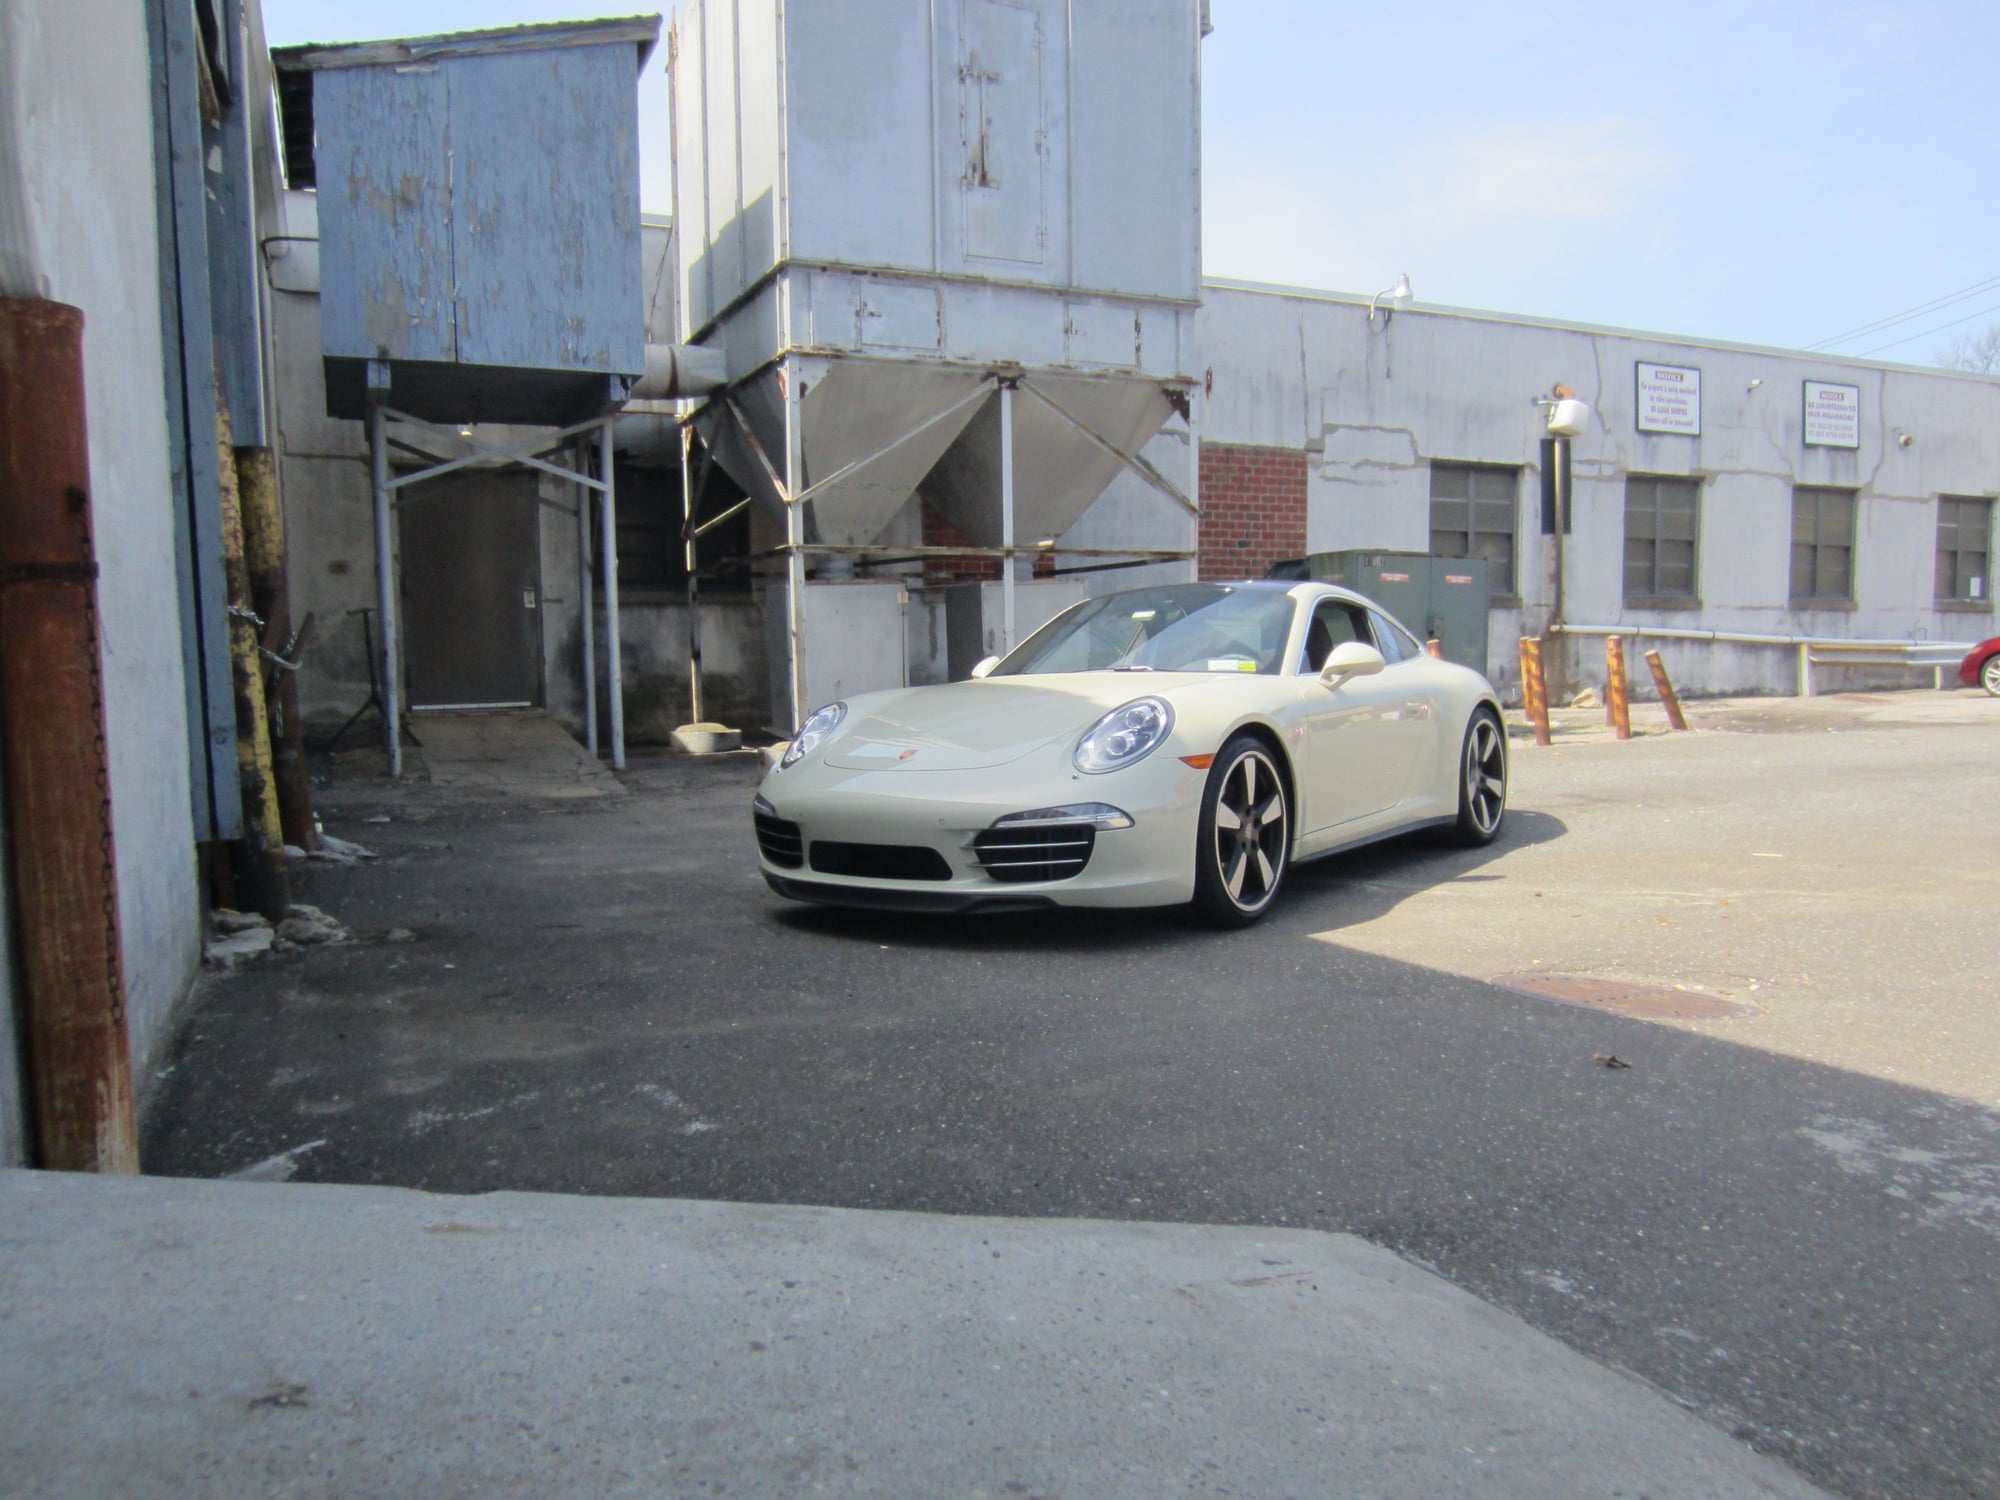 2014 Porsche 911 - 2014 Porsche 911 Carrera 50 - Used - VIN WP0ABA2A99ES12290 - 8,385 Miles - White - Great Neck, NY 11021, United States